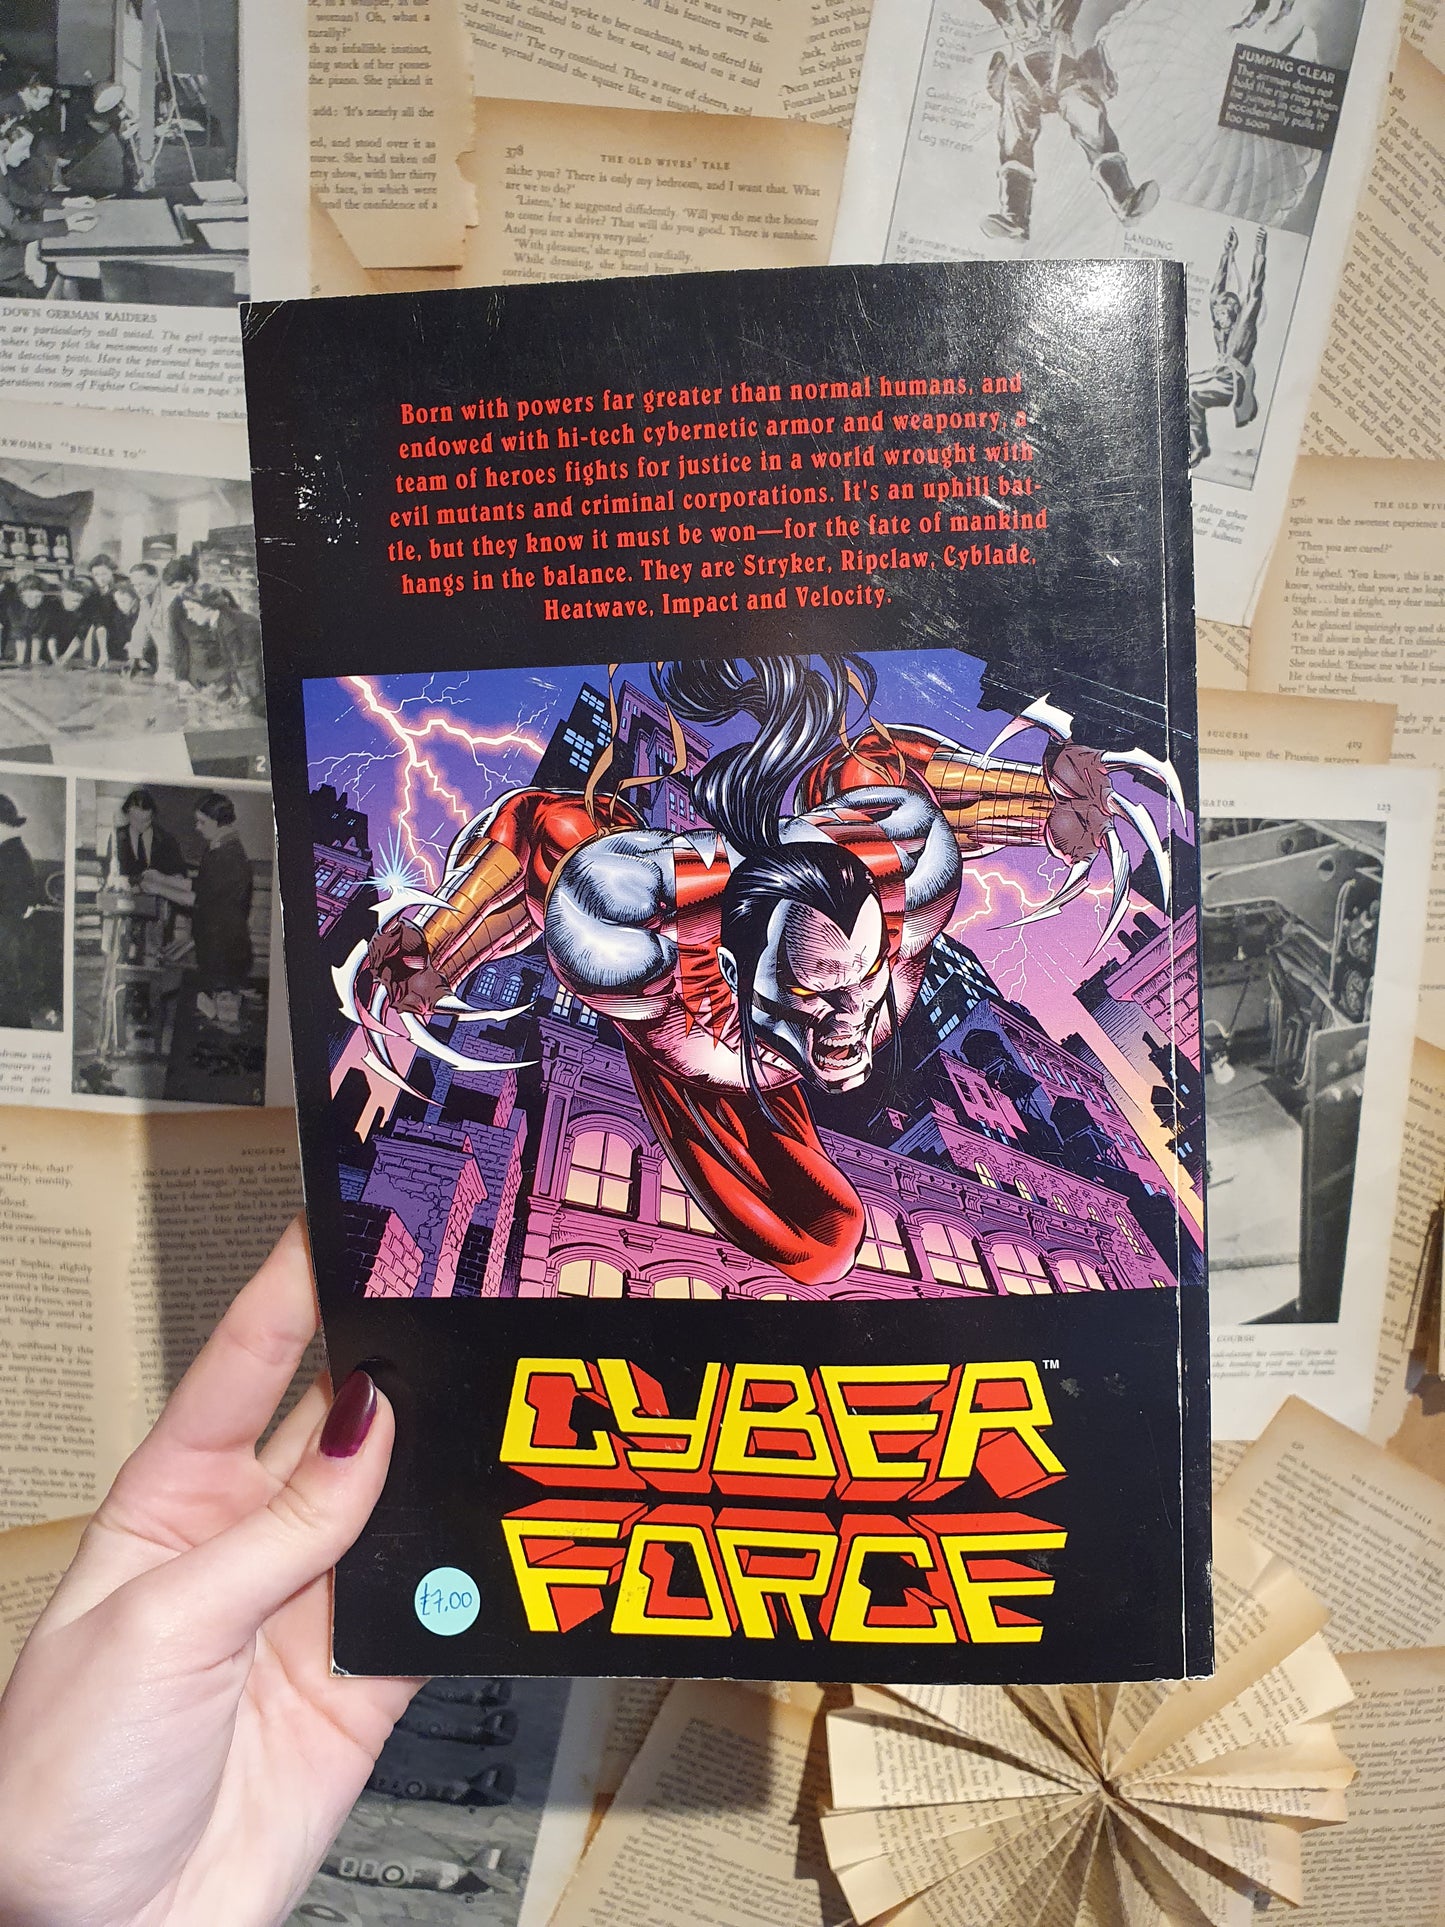 Cyberforce: The Tin Men of War by Marc Silvestri (1993)